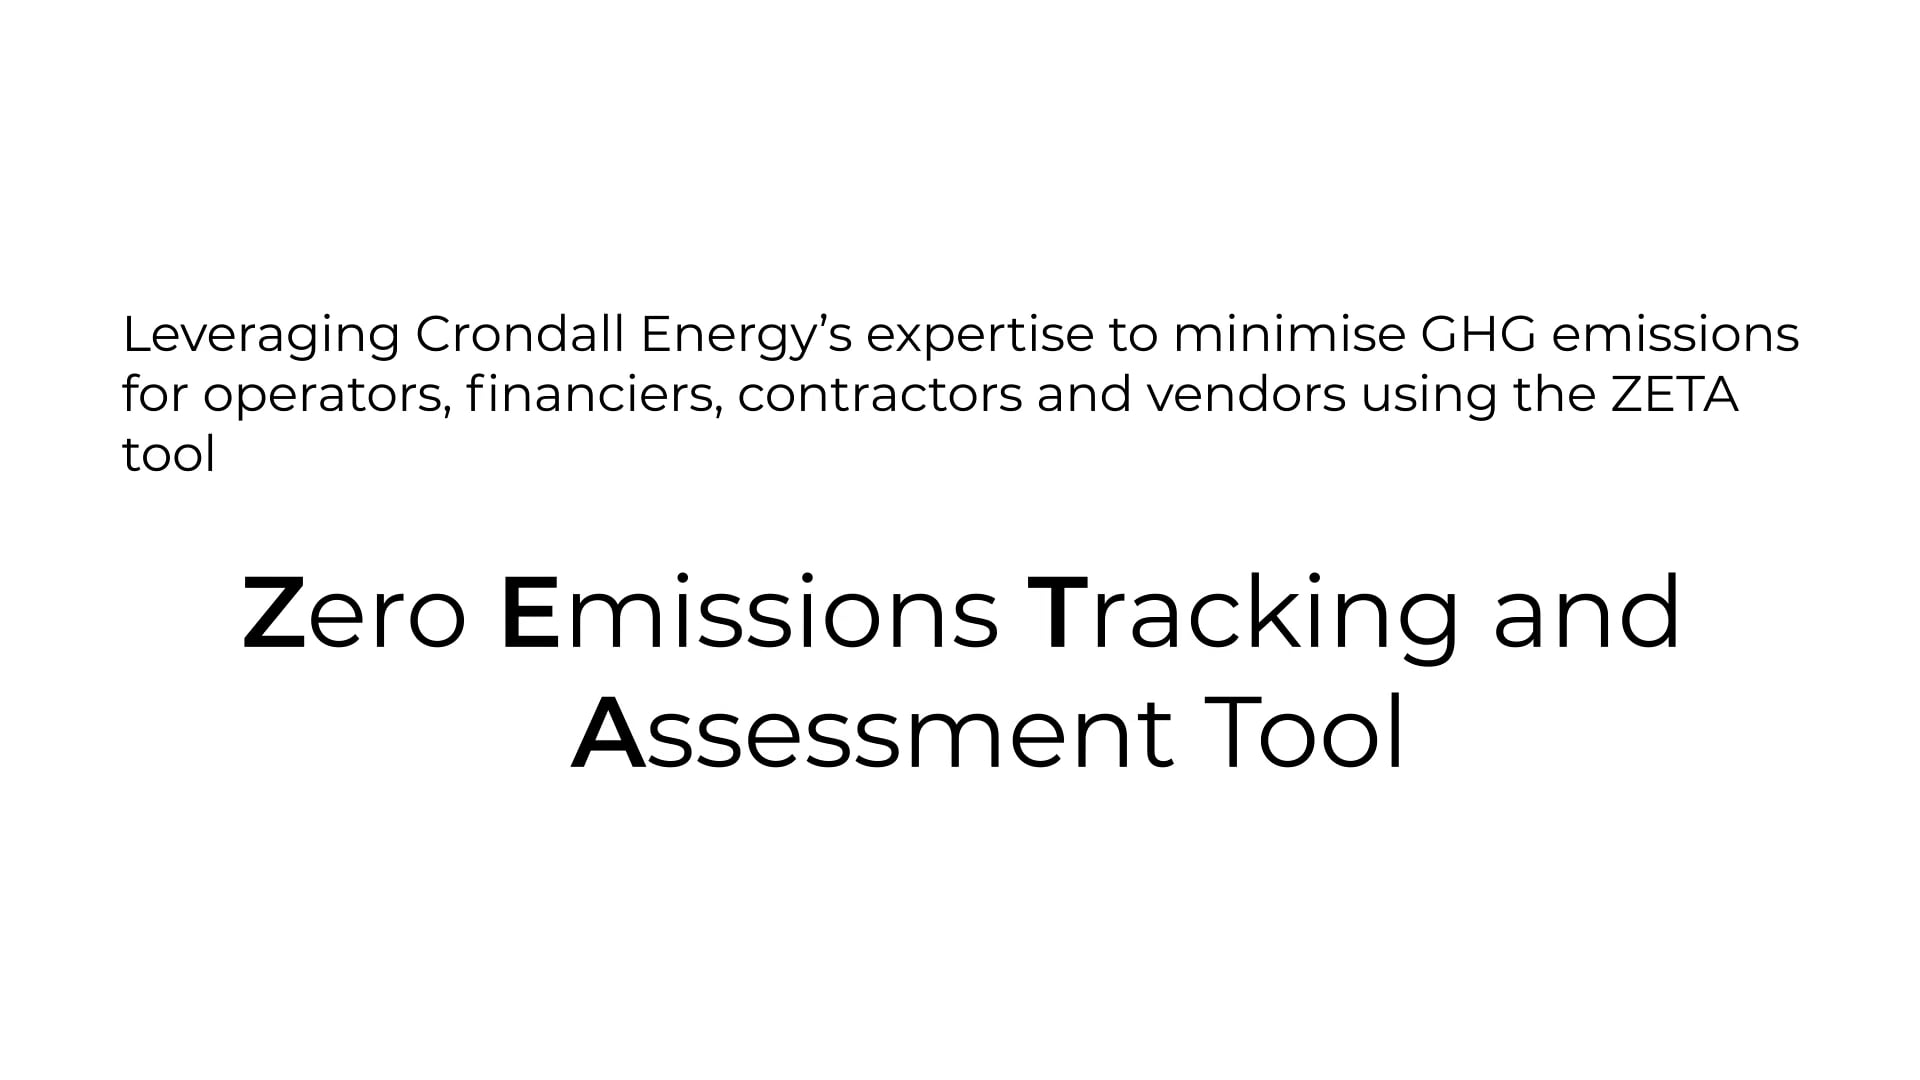 ZETA: Zero Emissions Tracking & Assessment from Crondall Energy